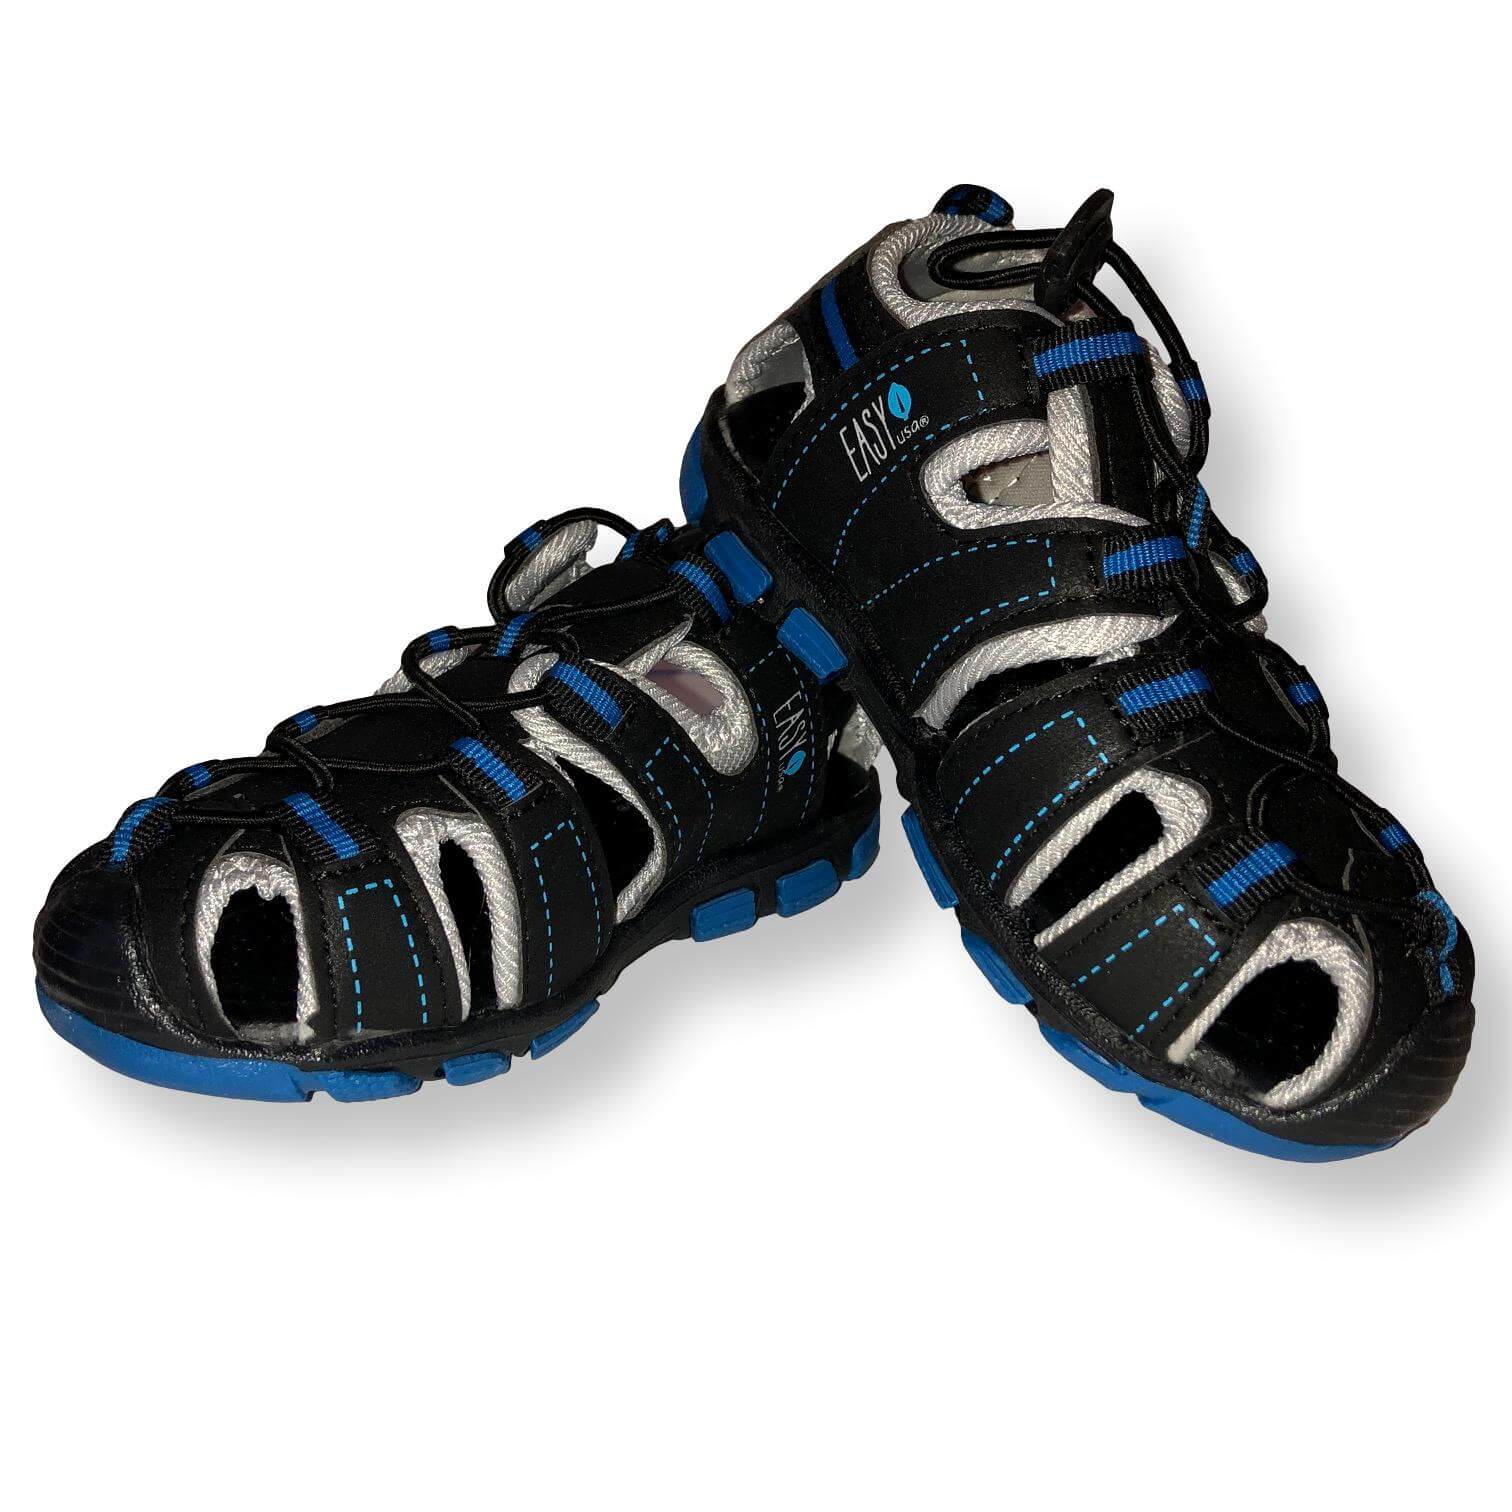 Boys Sandals Closed Toe Hiking Shoe Toddler, Little and Big Kids Sports Sandal, Black/Blue,Gray,Black,Brown,Black/Red,Gray/Green Size 1-13 - FPI Ventures